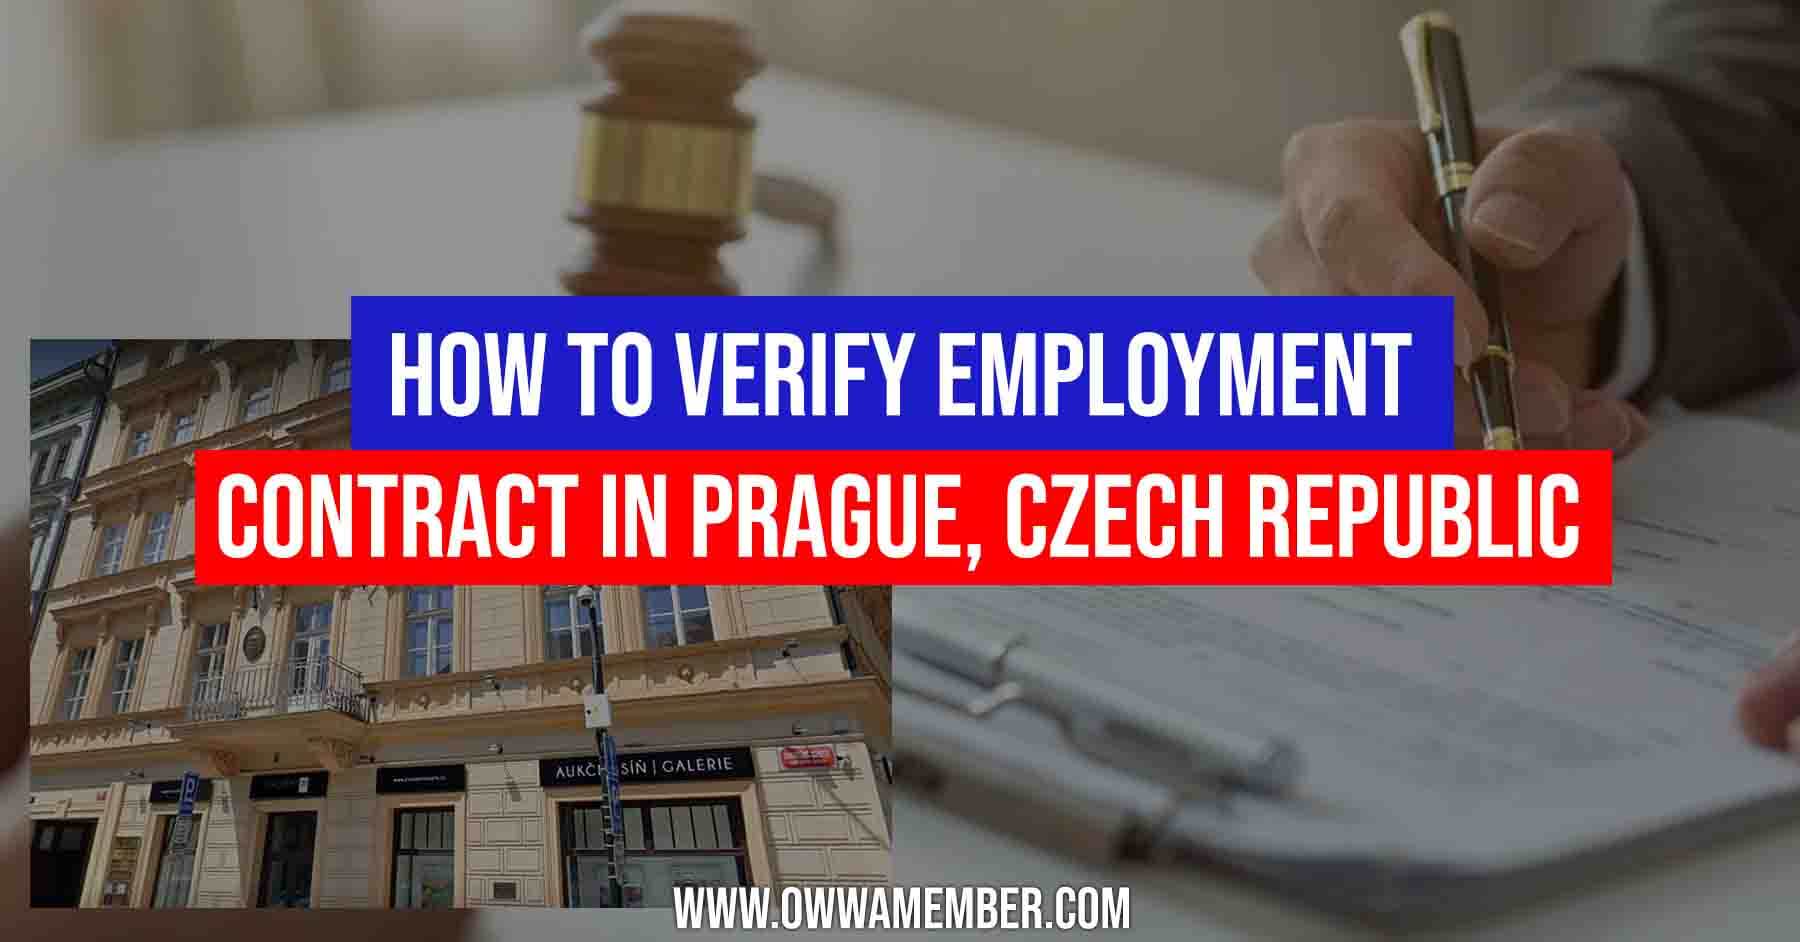 contract verification process in prague czech republic